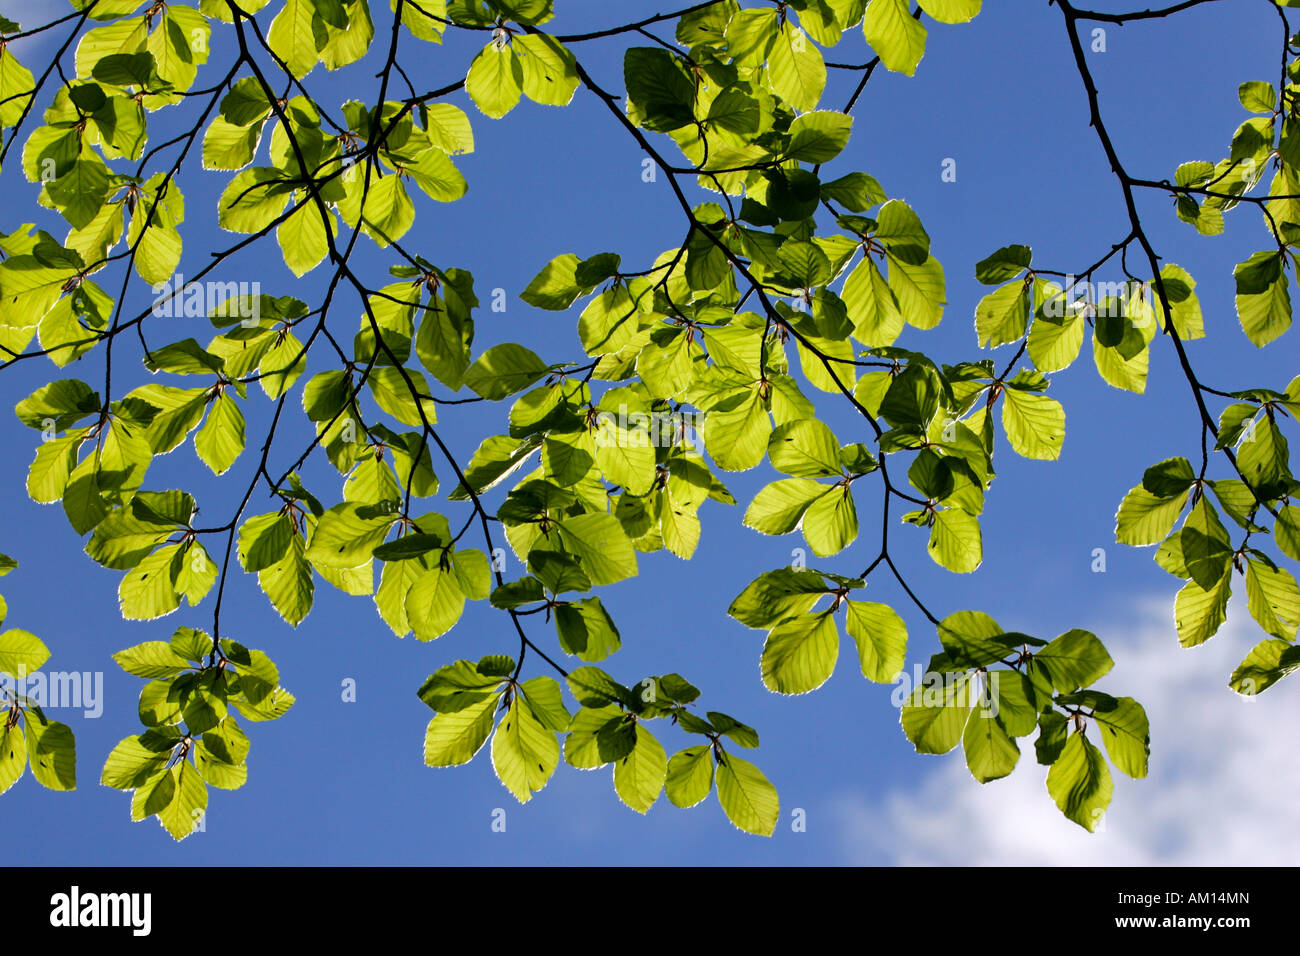 Laubbäume grüne himmel hi-res stock photography and images - Alamy